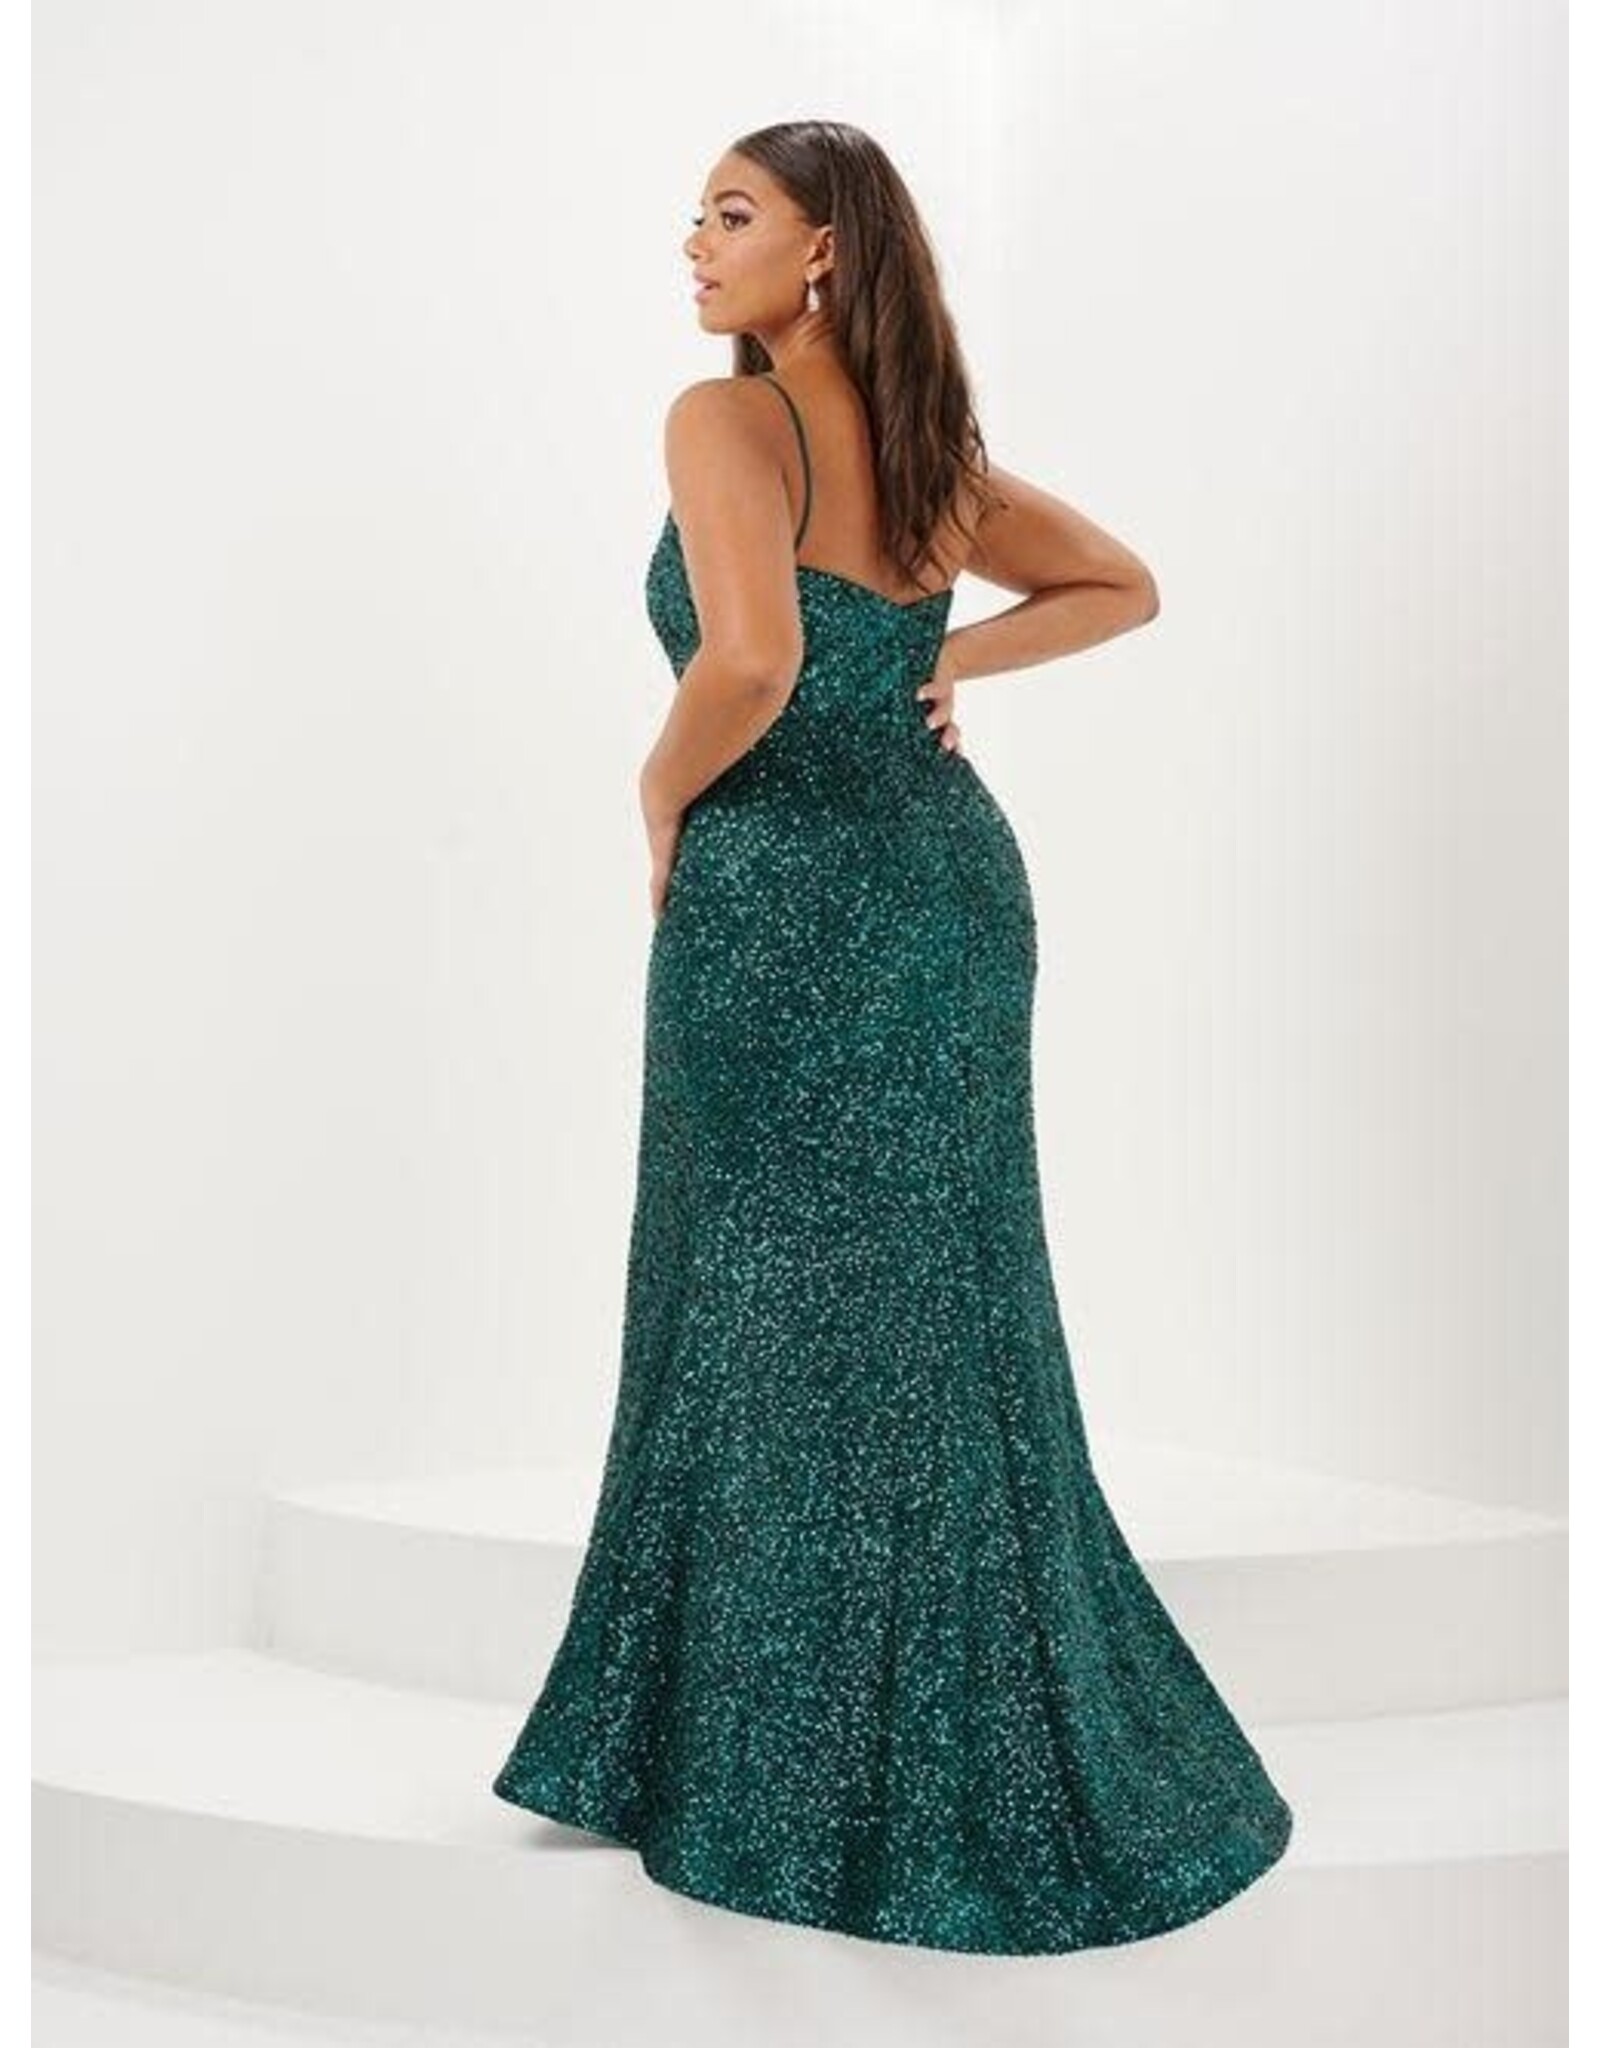 Emerald Long Formal Dress - 18W